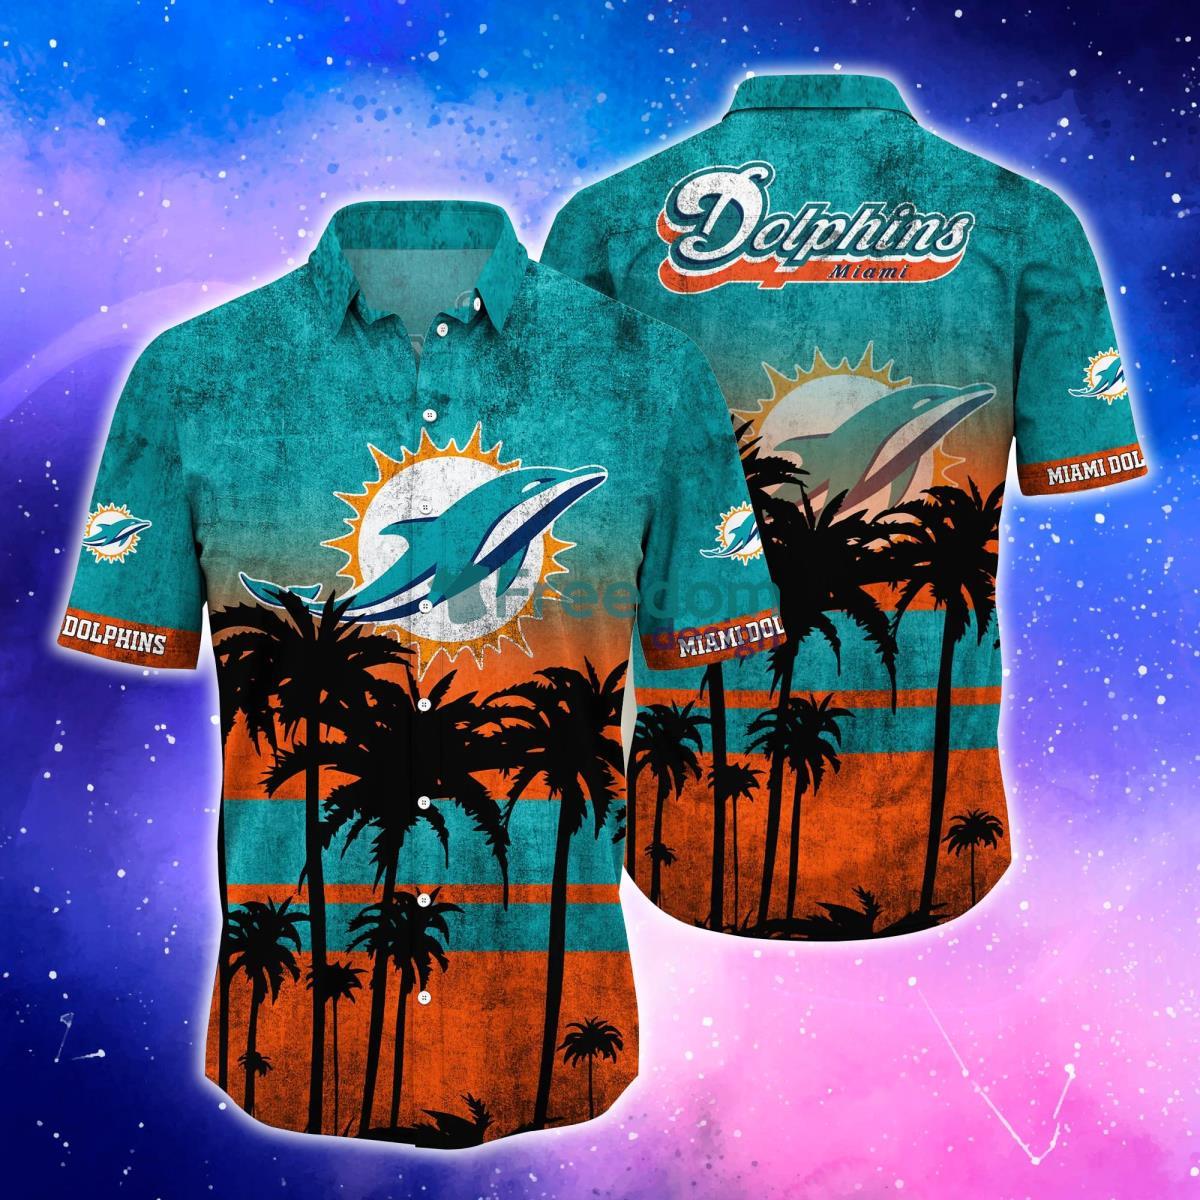 Miami Marlins MLB Flower Hawaiian Shirt Special Gift For Fans -  Freedomdesign